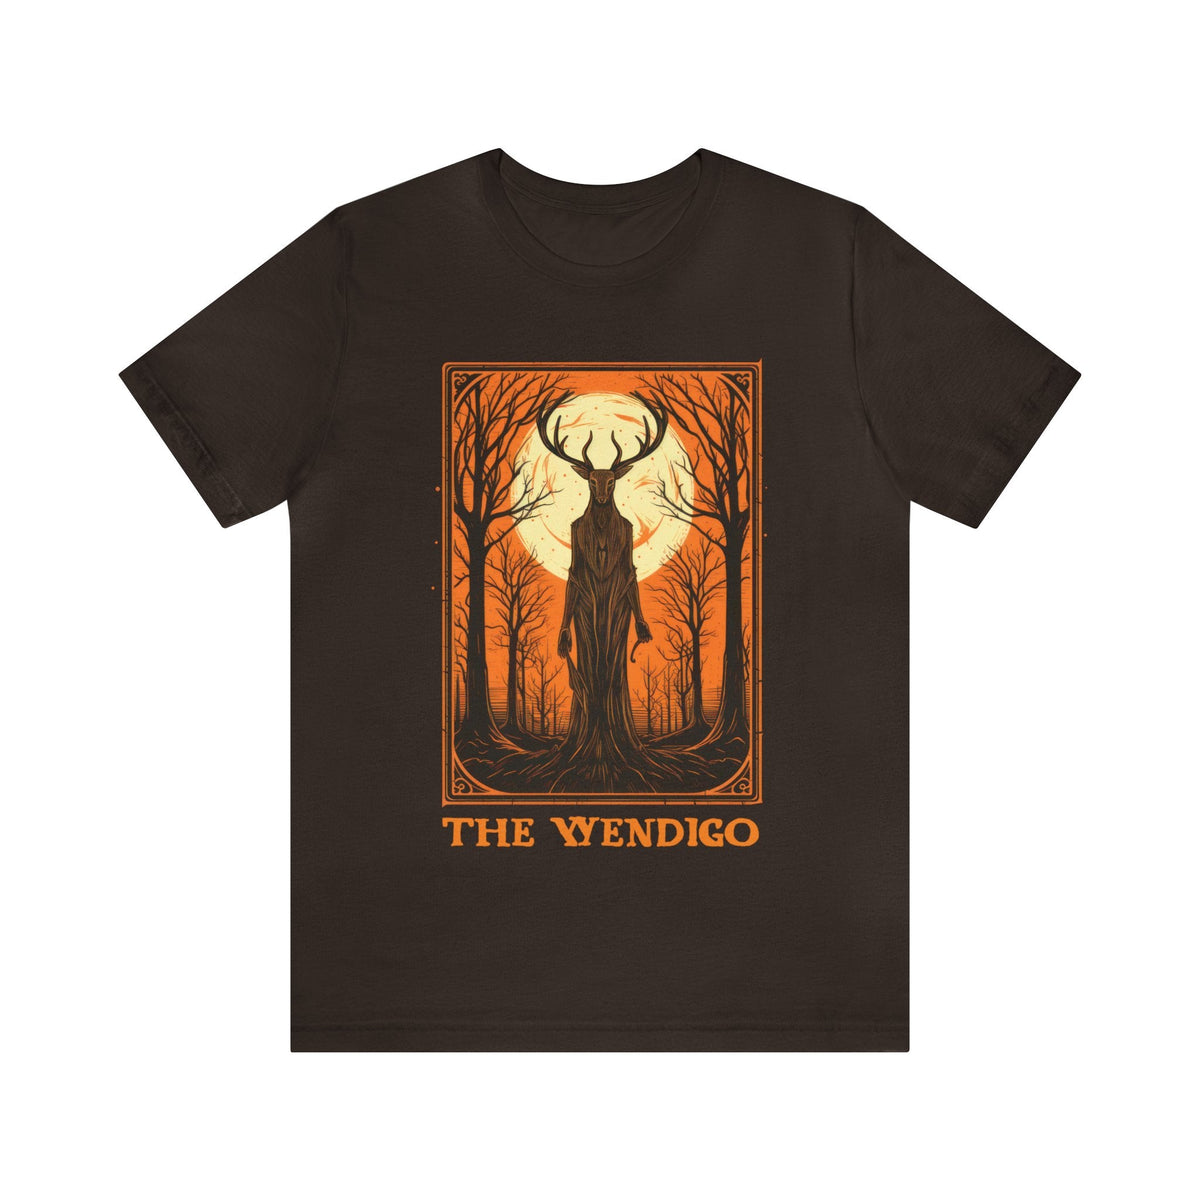 Wendigo Tarot Card T-Shirt - Goth Cloth Co.T-Shirt31726358778337968018